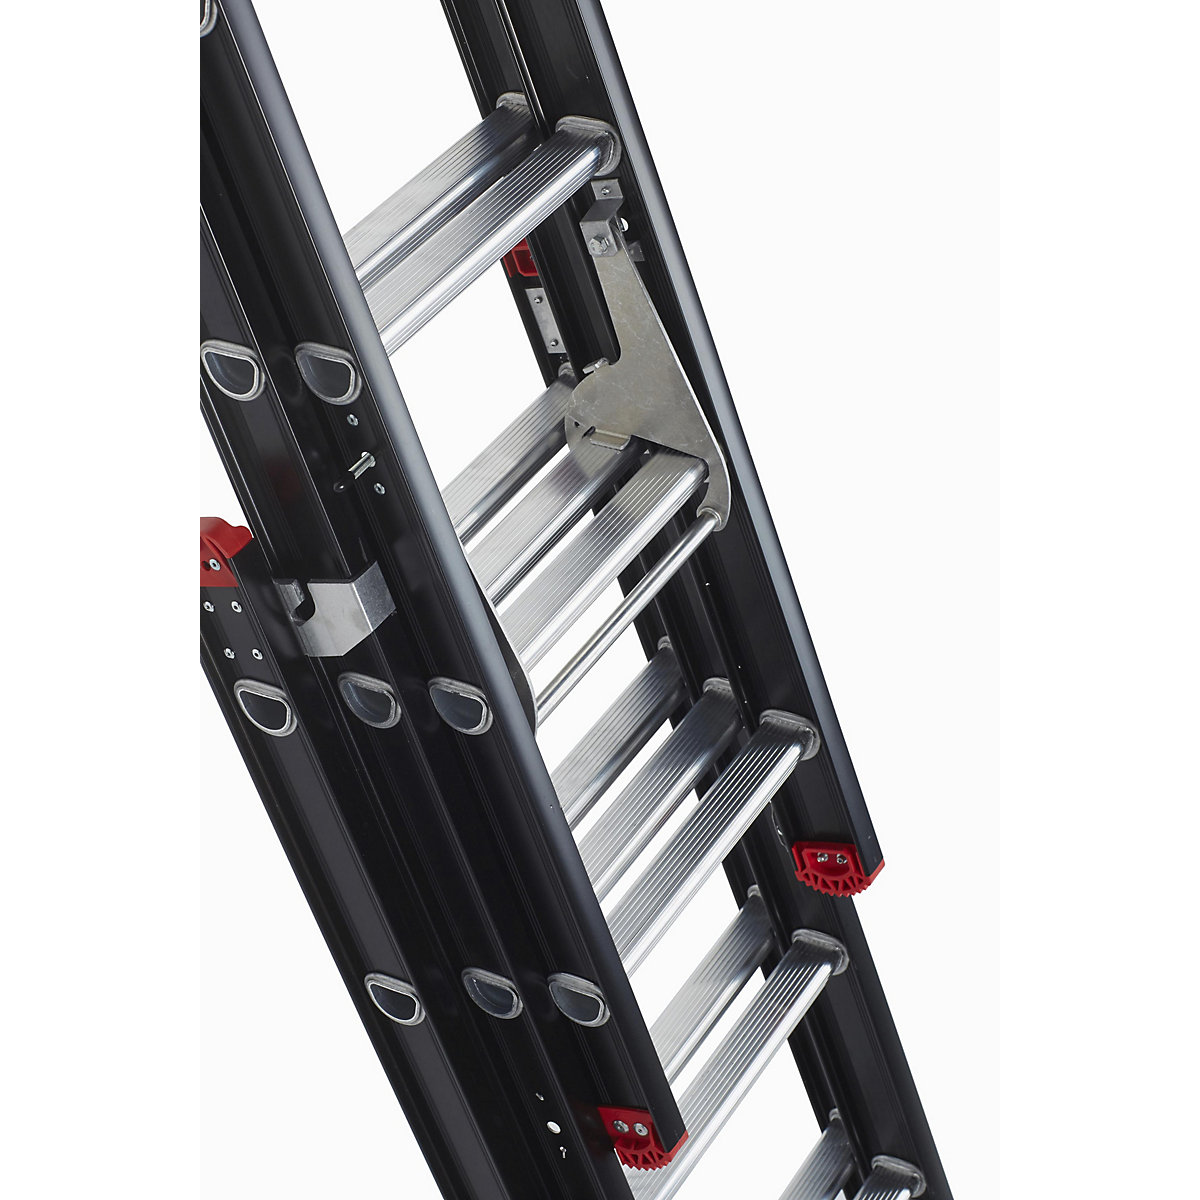 Escalera multiusos, revestida de aluminio – Altrex (Imagen del producto 10)-9